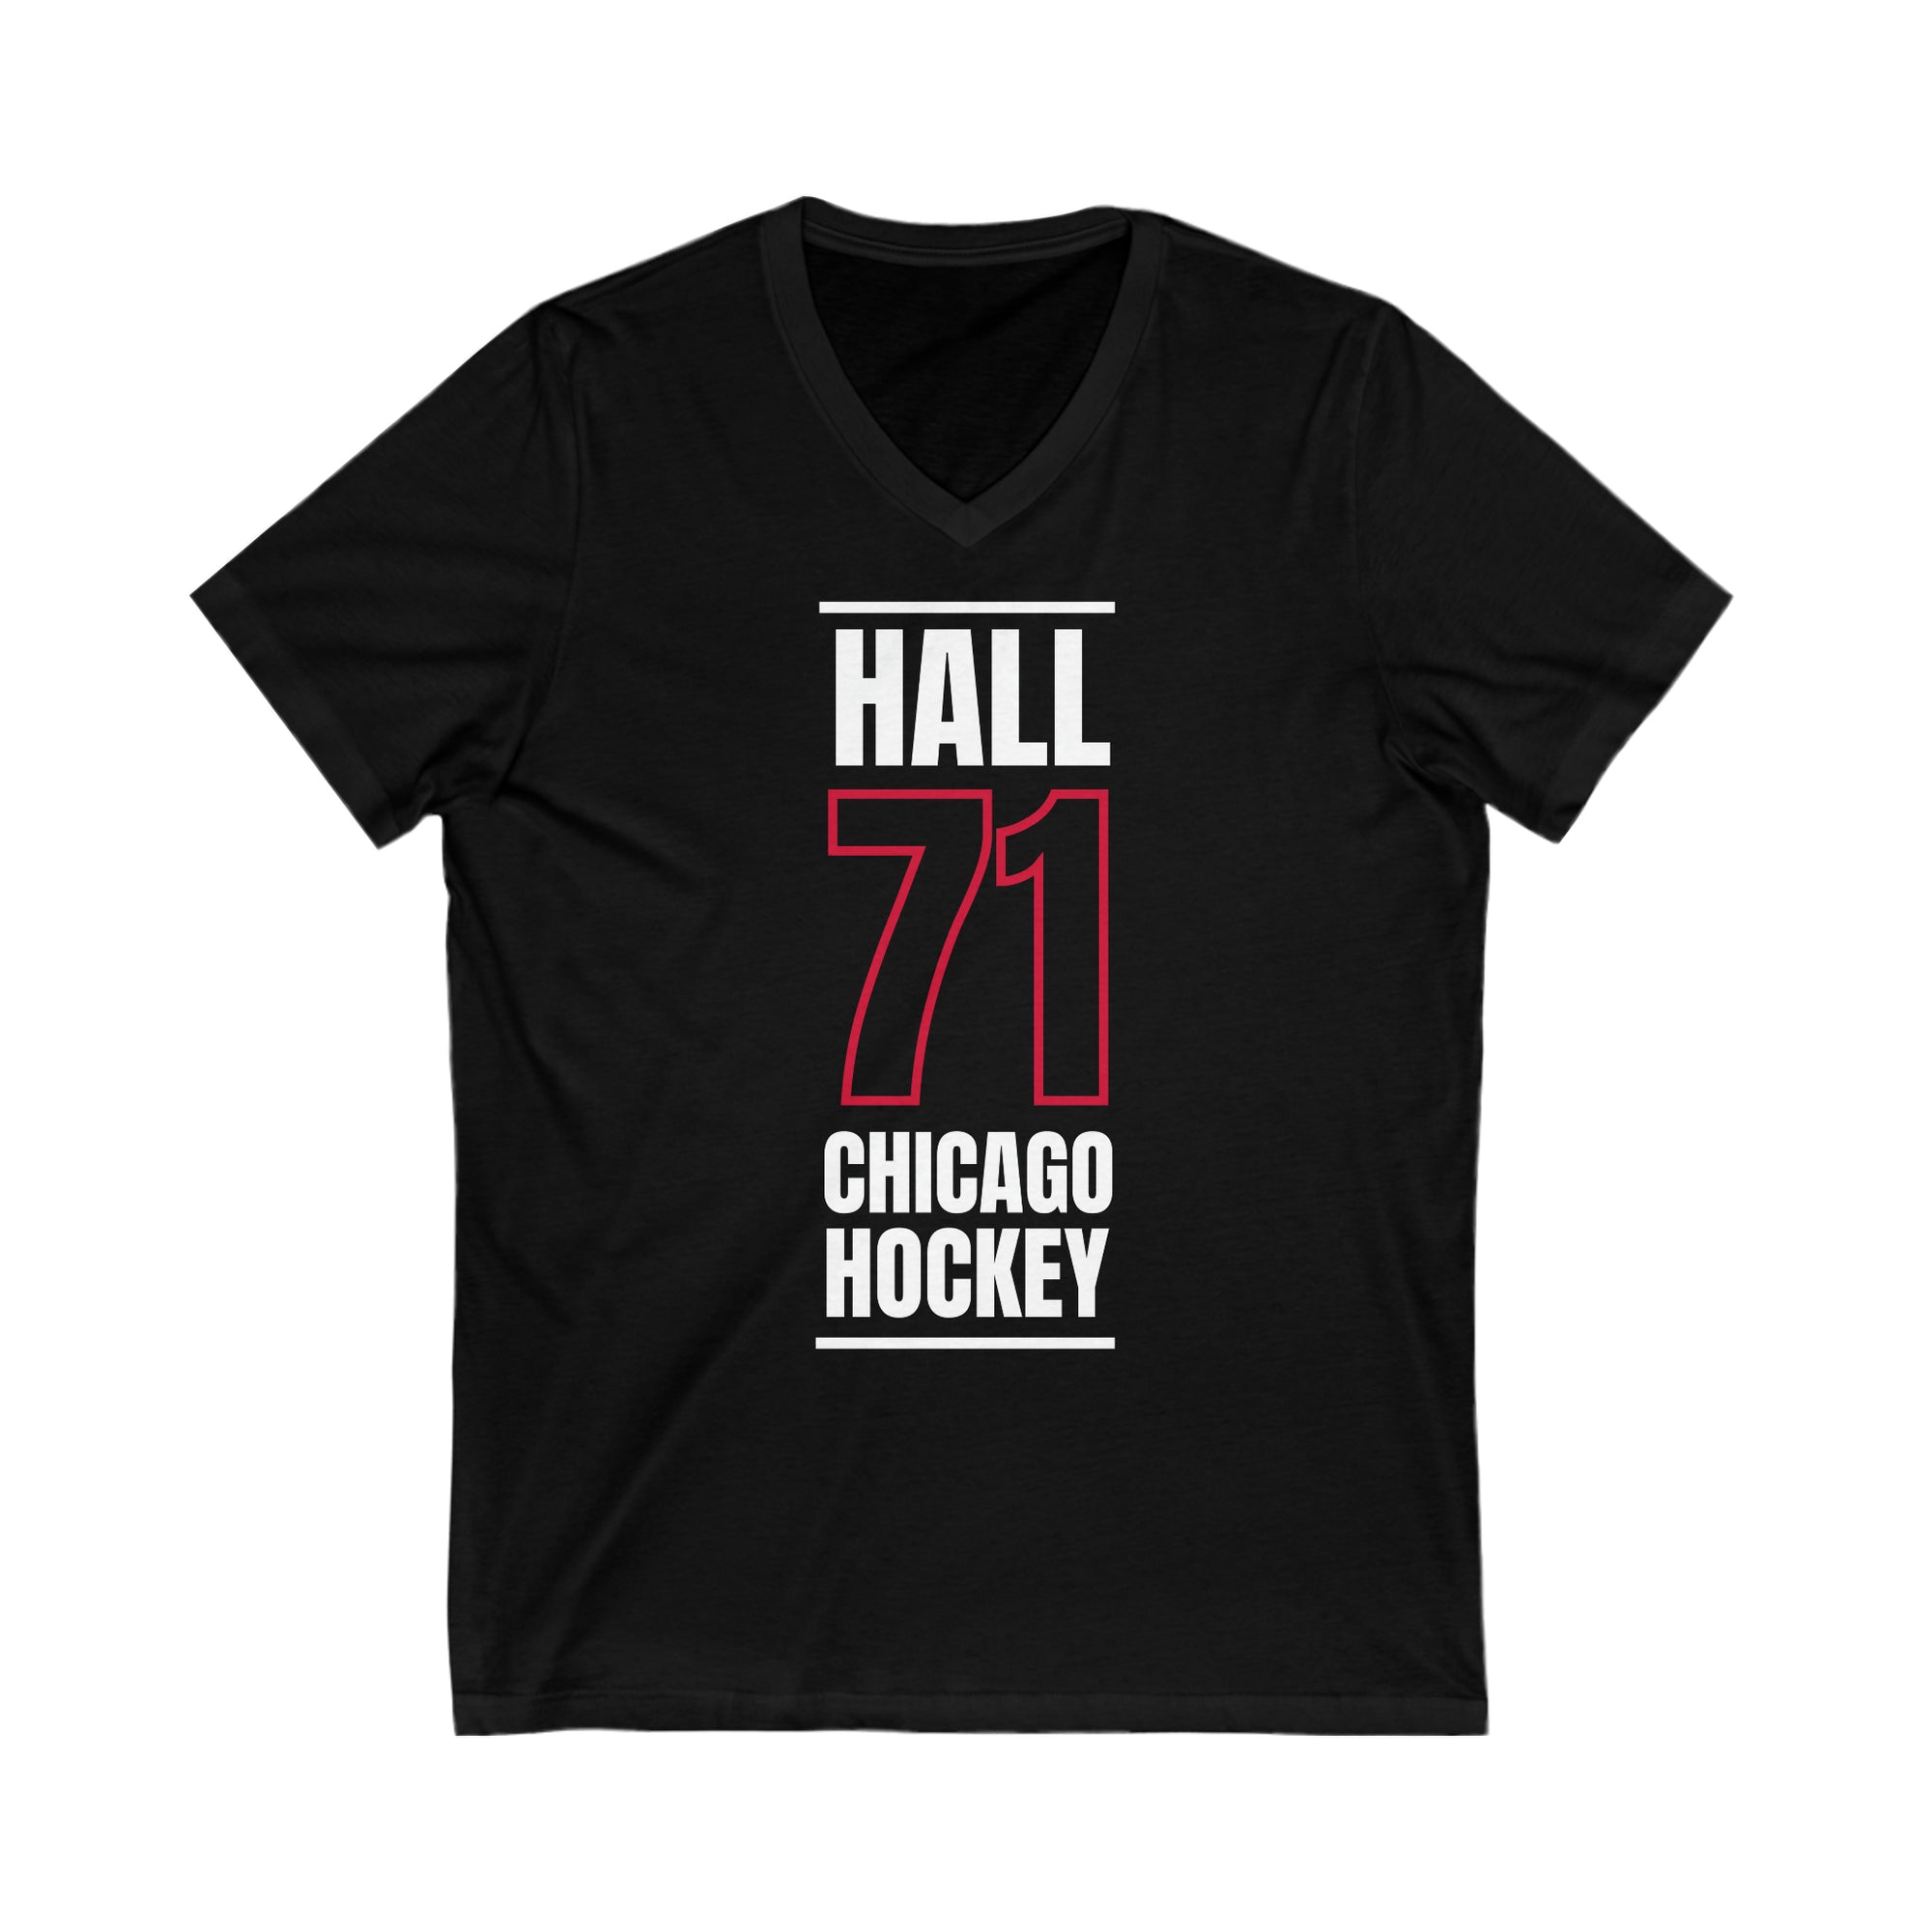 Hall 71 Chicago Hockey Black Vertical Design Unisex V-Neck Tee